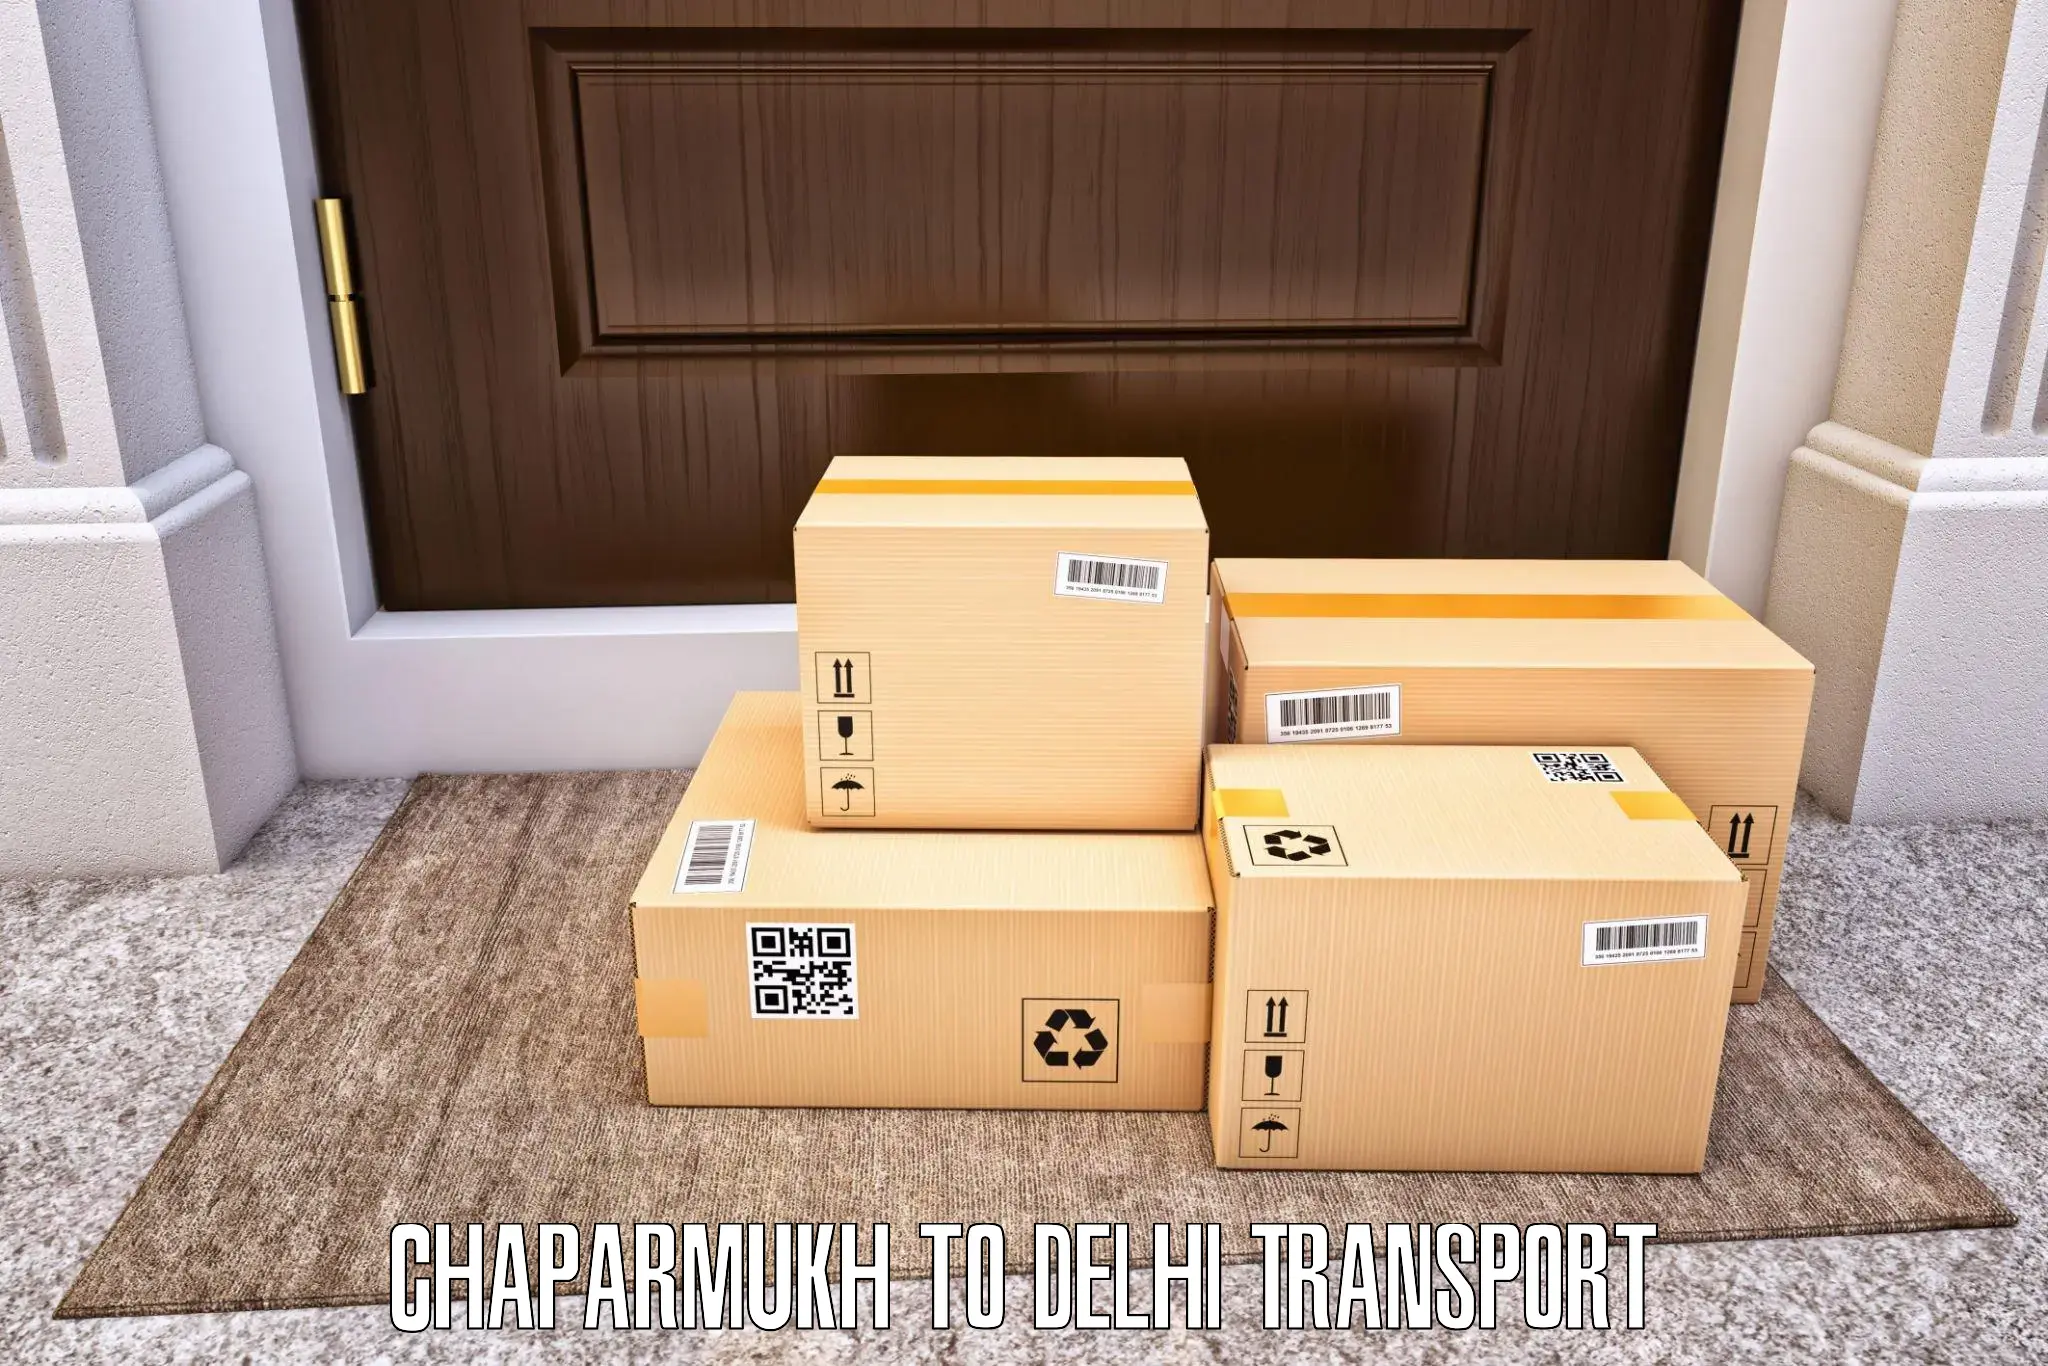 Truck transport companies in India Chaparmukh to Sarojini Nagar